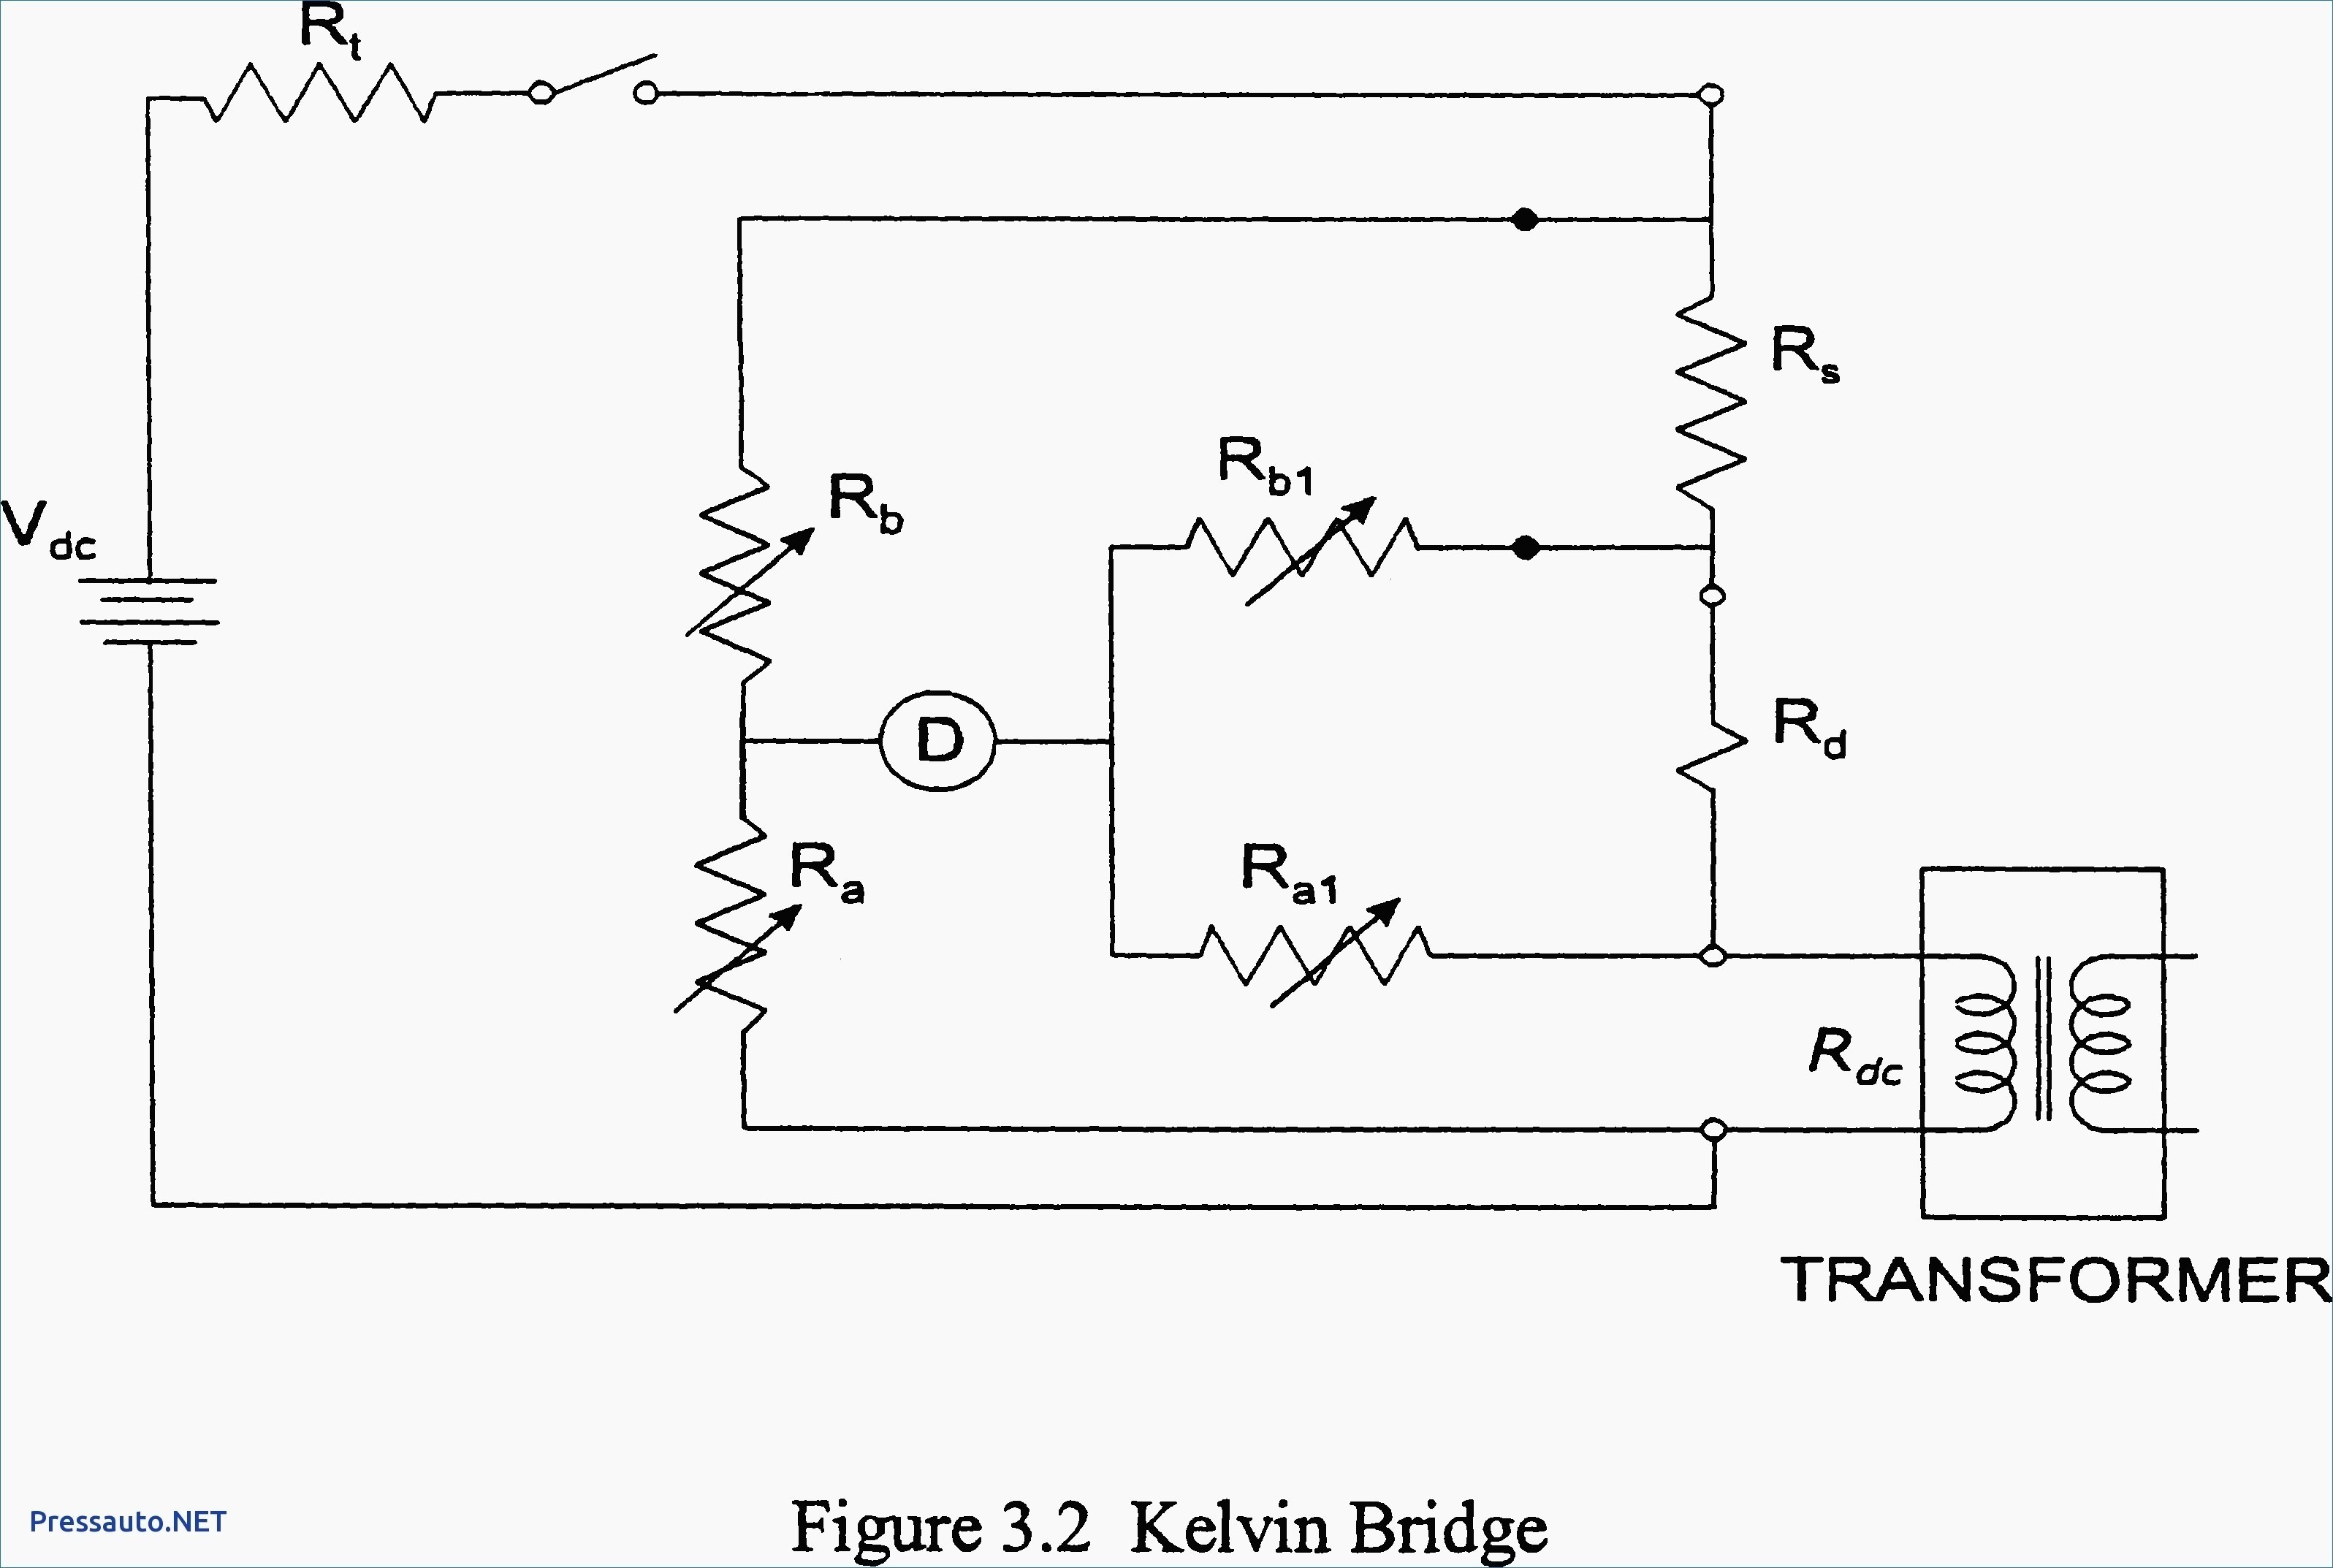 Kinovonline Page 3 37 Wiring Diagram Color 480v to 120v Transformer Wiring Diagram